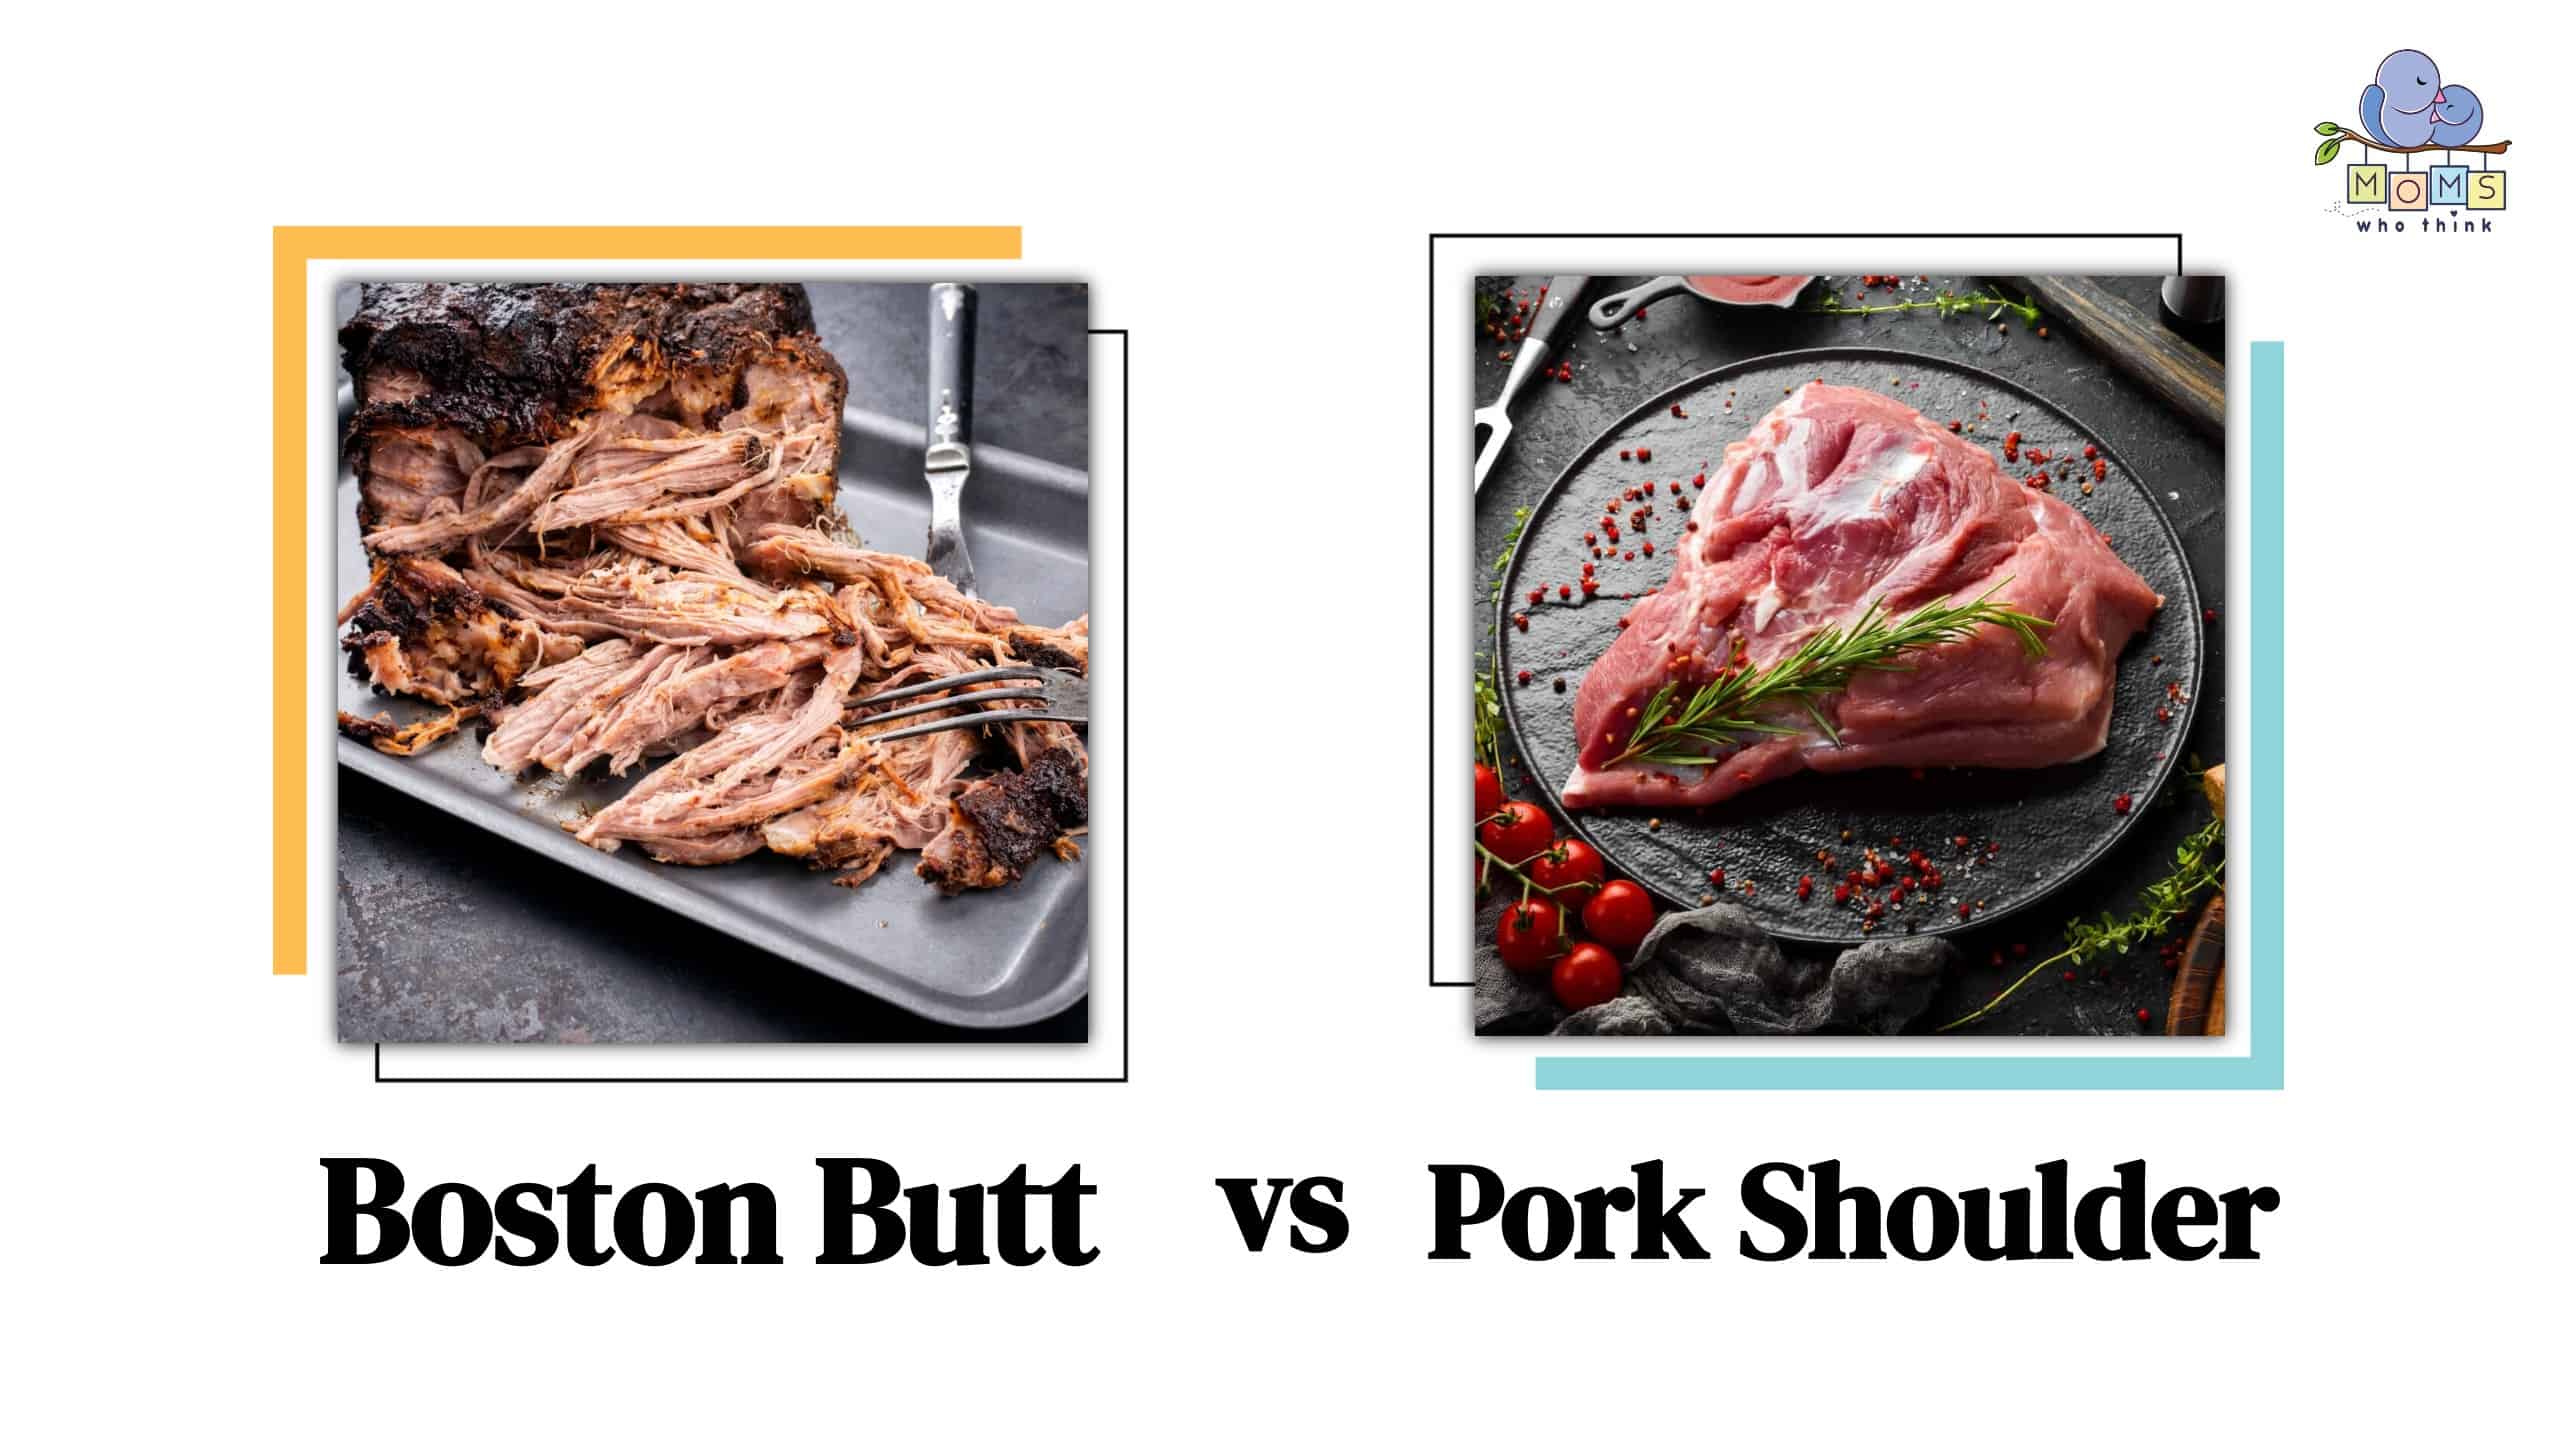 Boston Butt vs Pork Shoulder